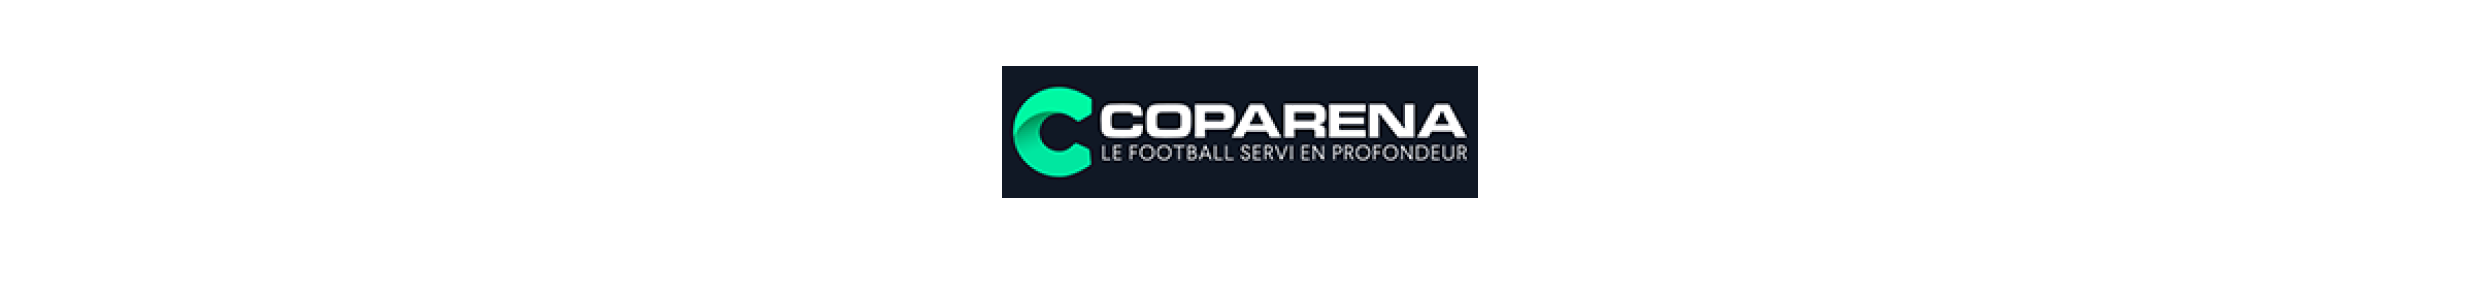 COPARENA logo